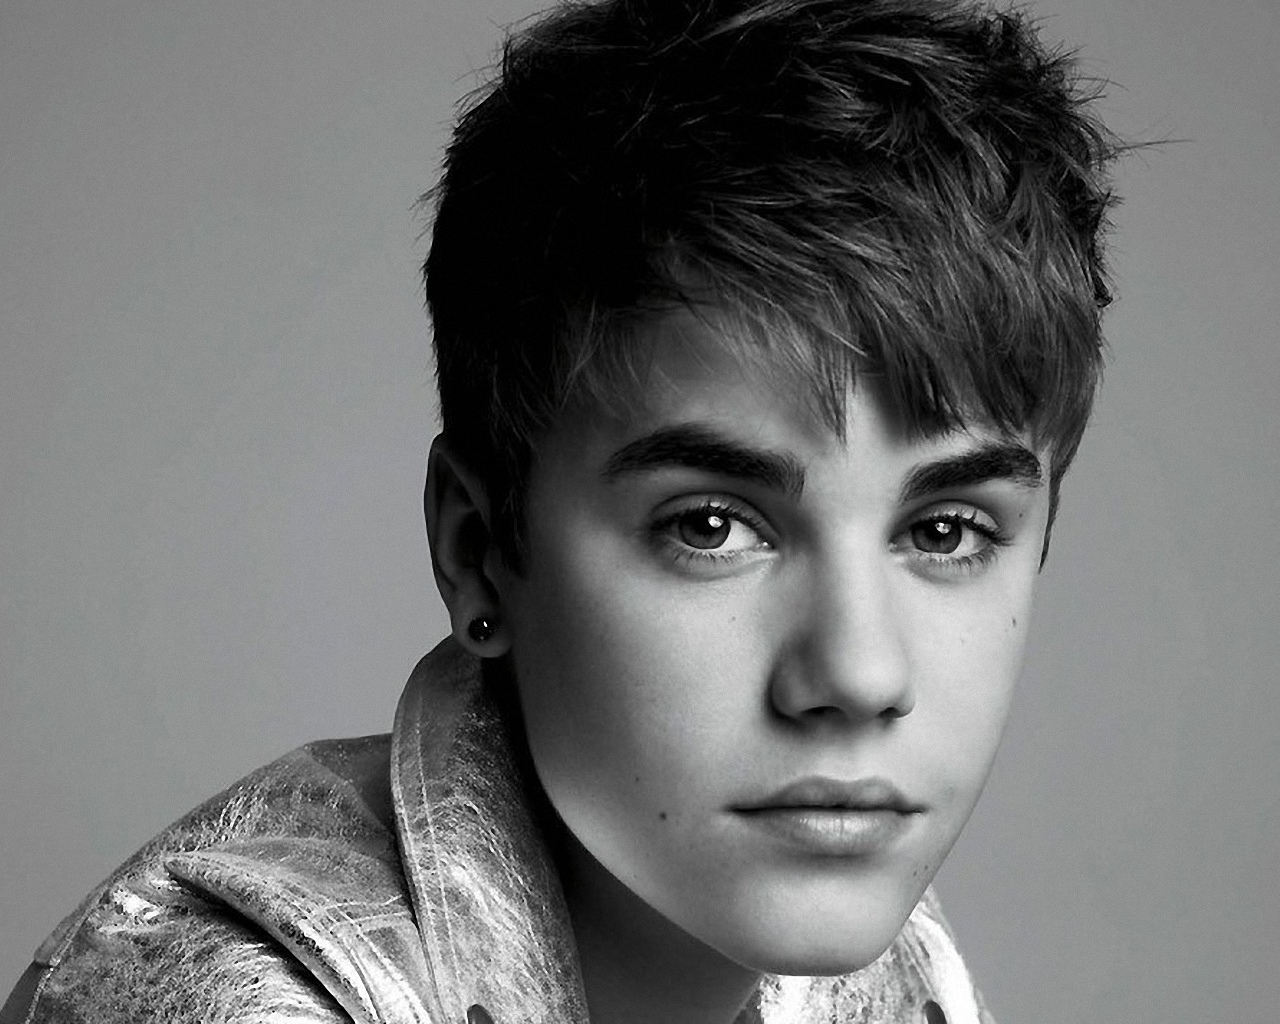 Justin Bieber Crown wallpapers | Justin Bieber Crown stock photos